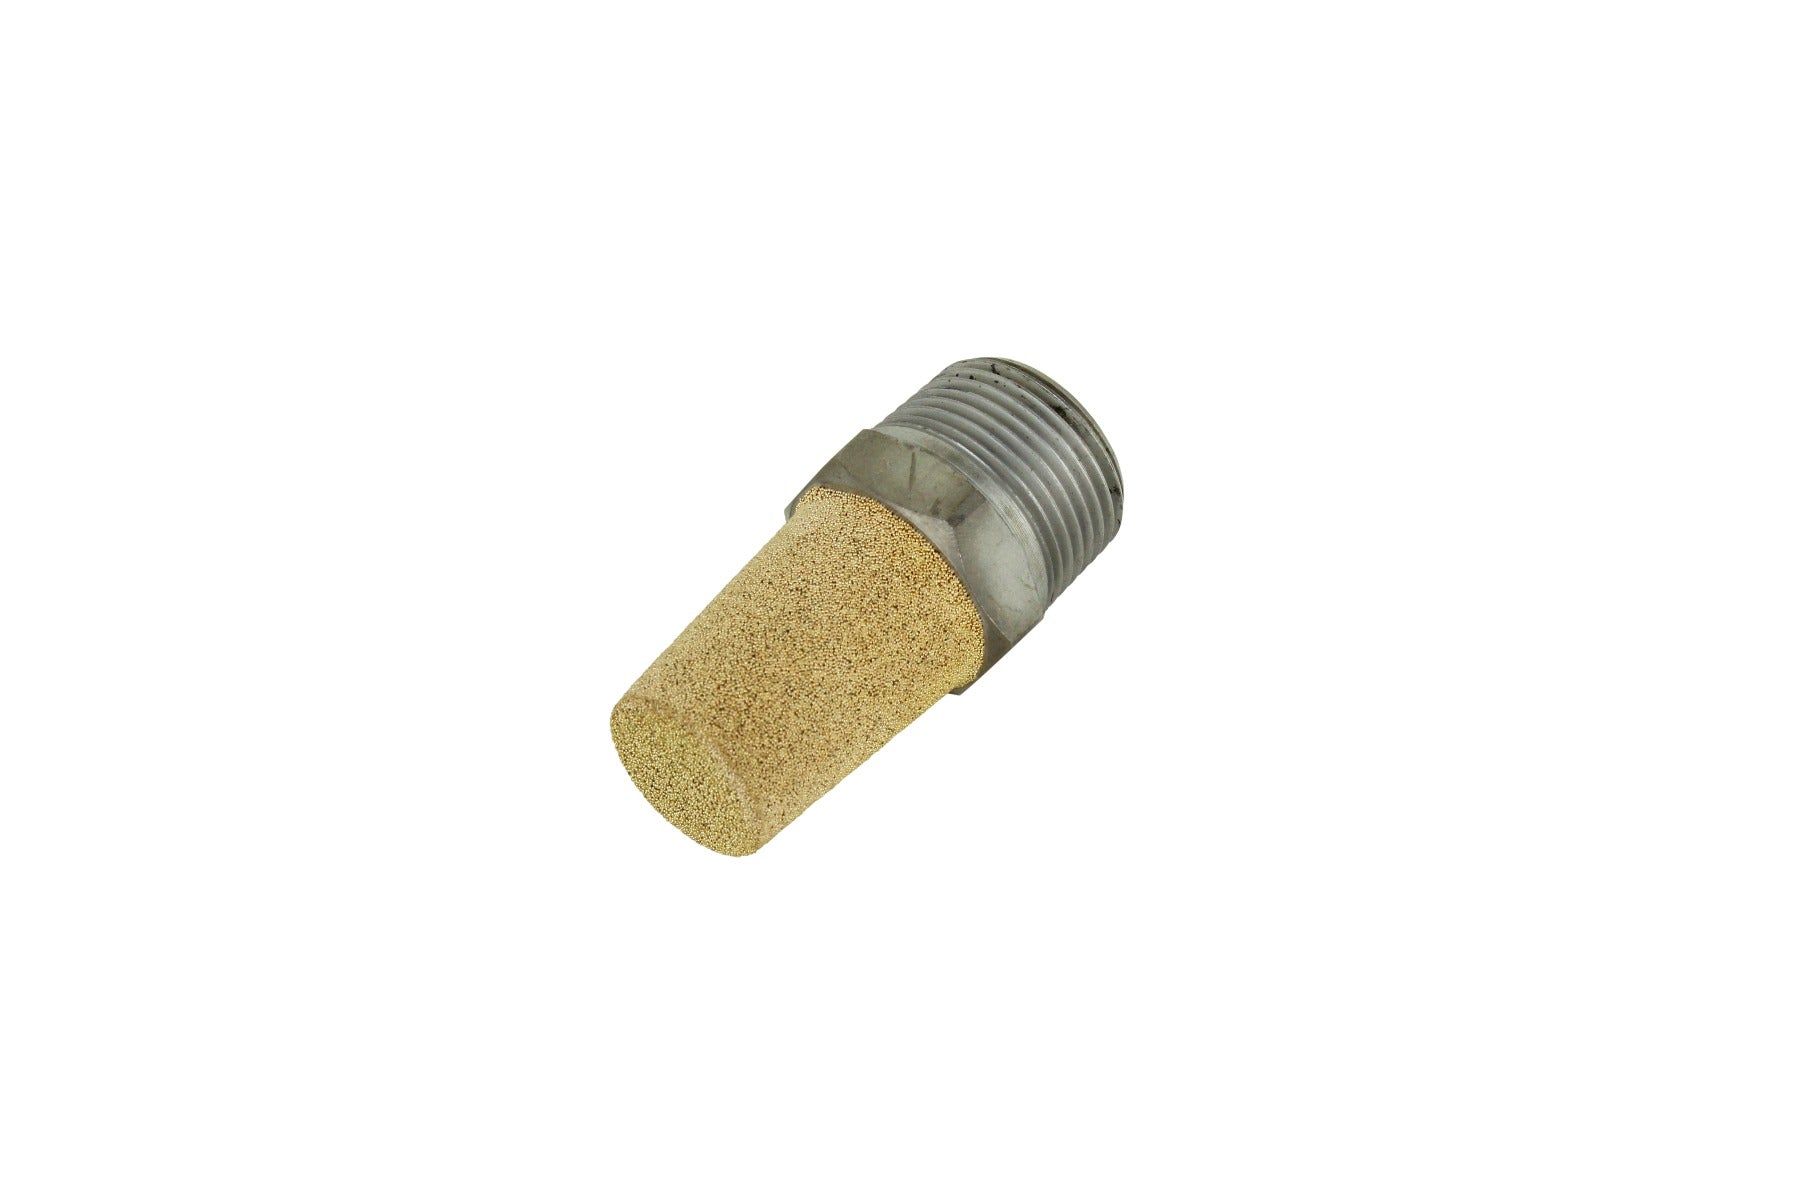 Pneumatic Exhaust Muffler, 3/4” MNPT, 40 Micron Sintered Bronze Silencer/Diffuse Air & Noise Reducer (Box of 25)